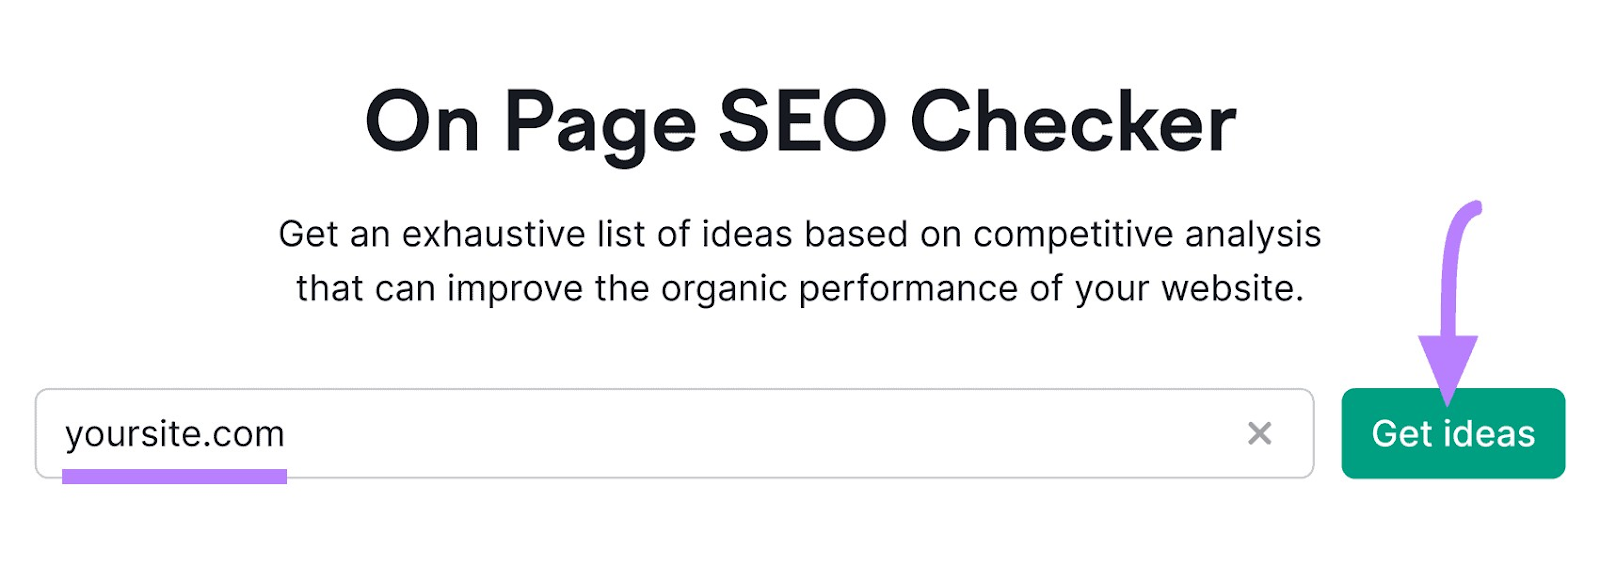 On Page SEO Checker tool